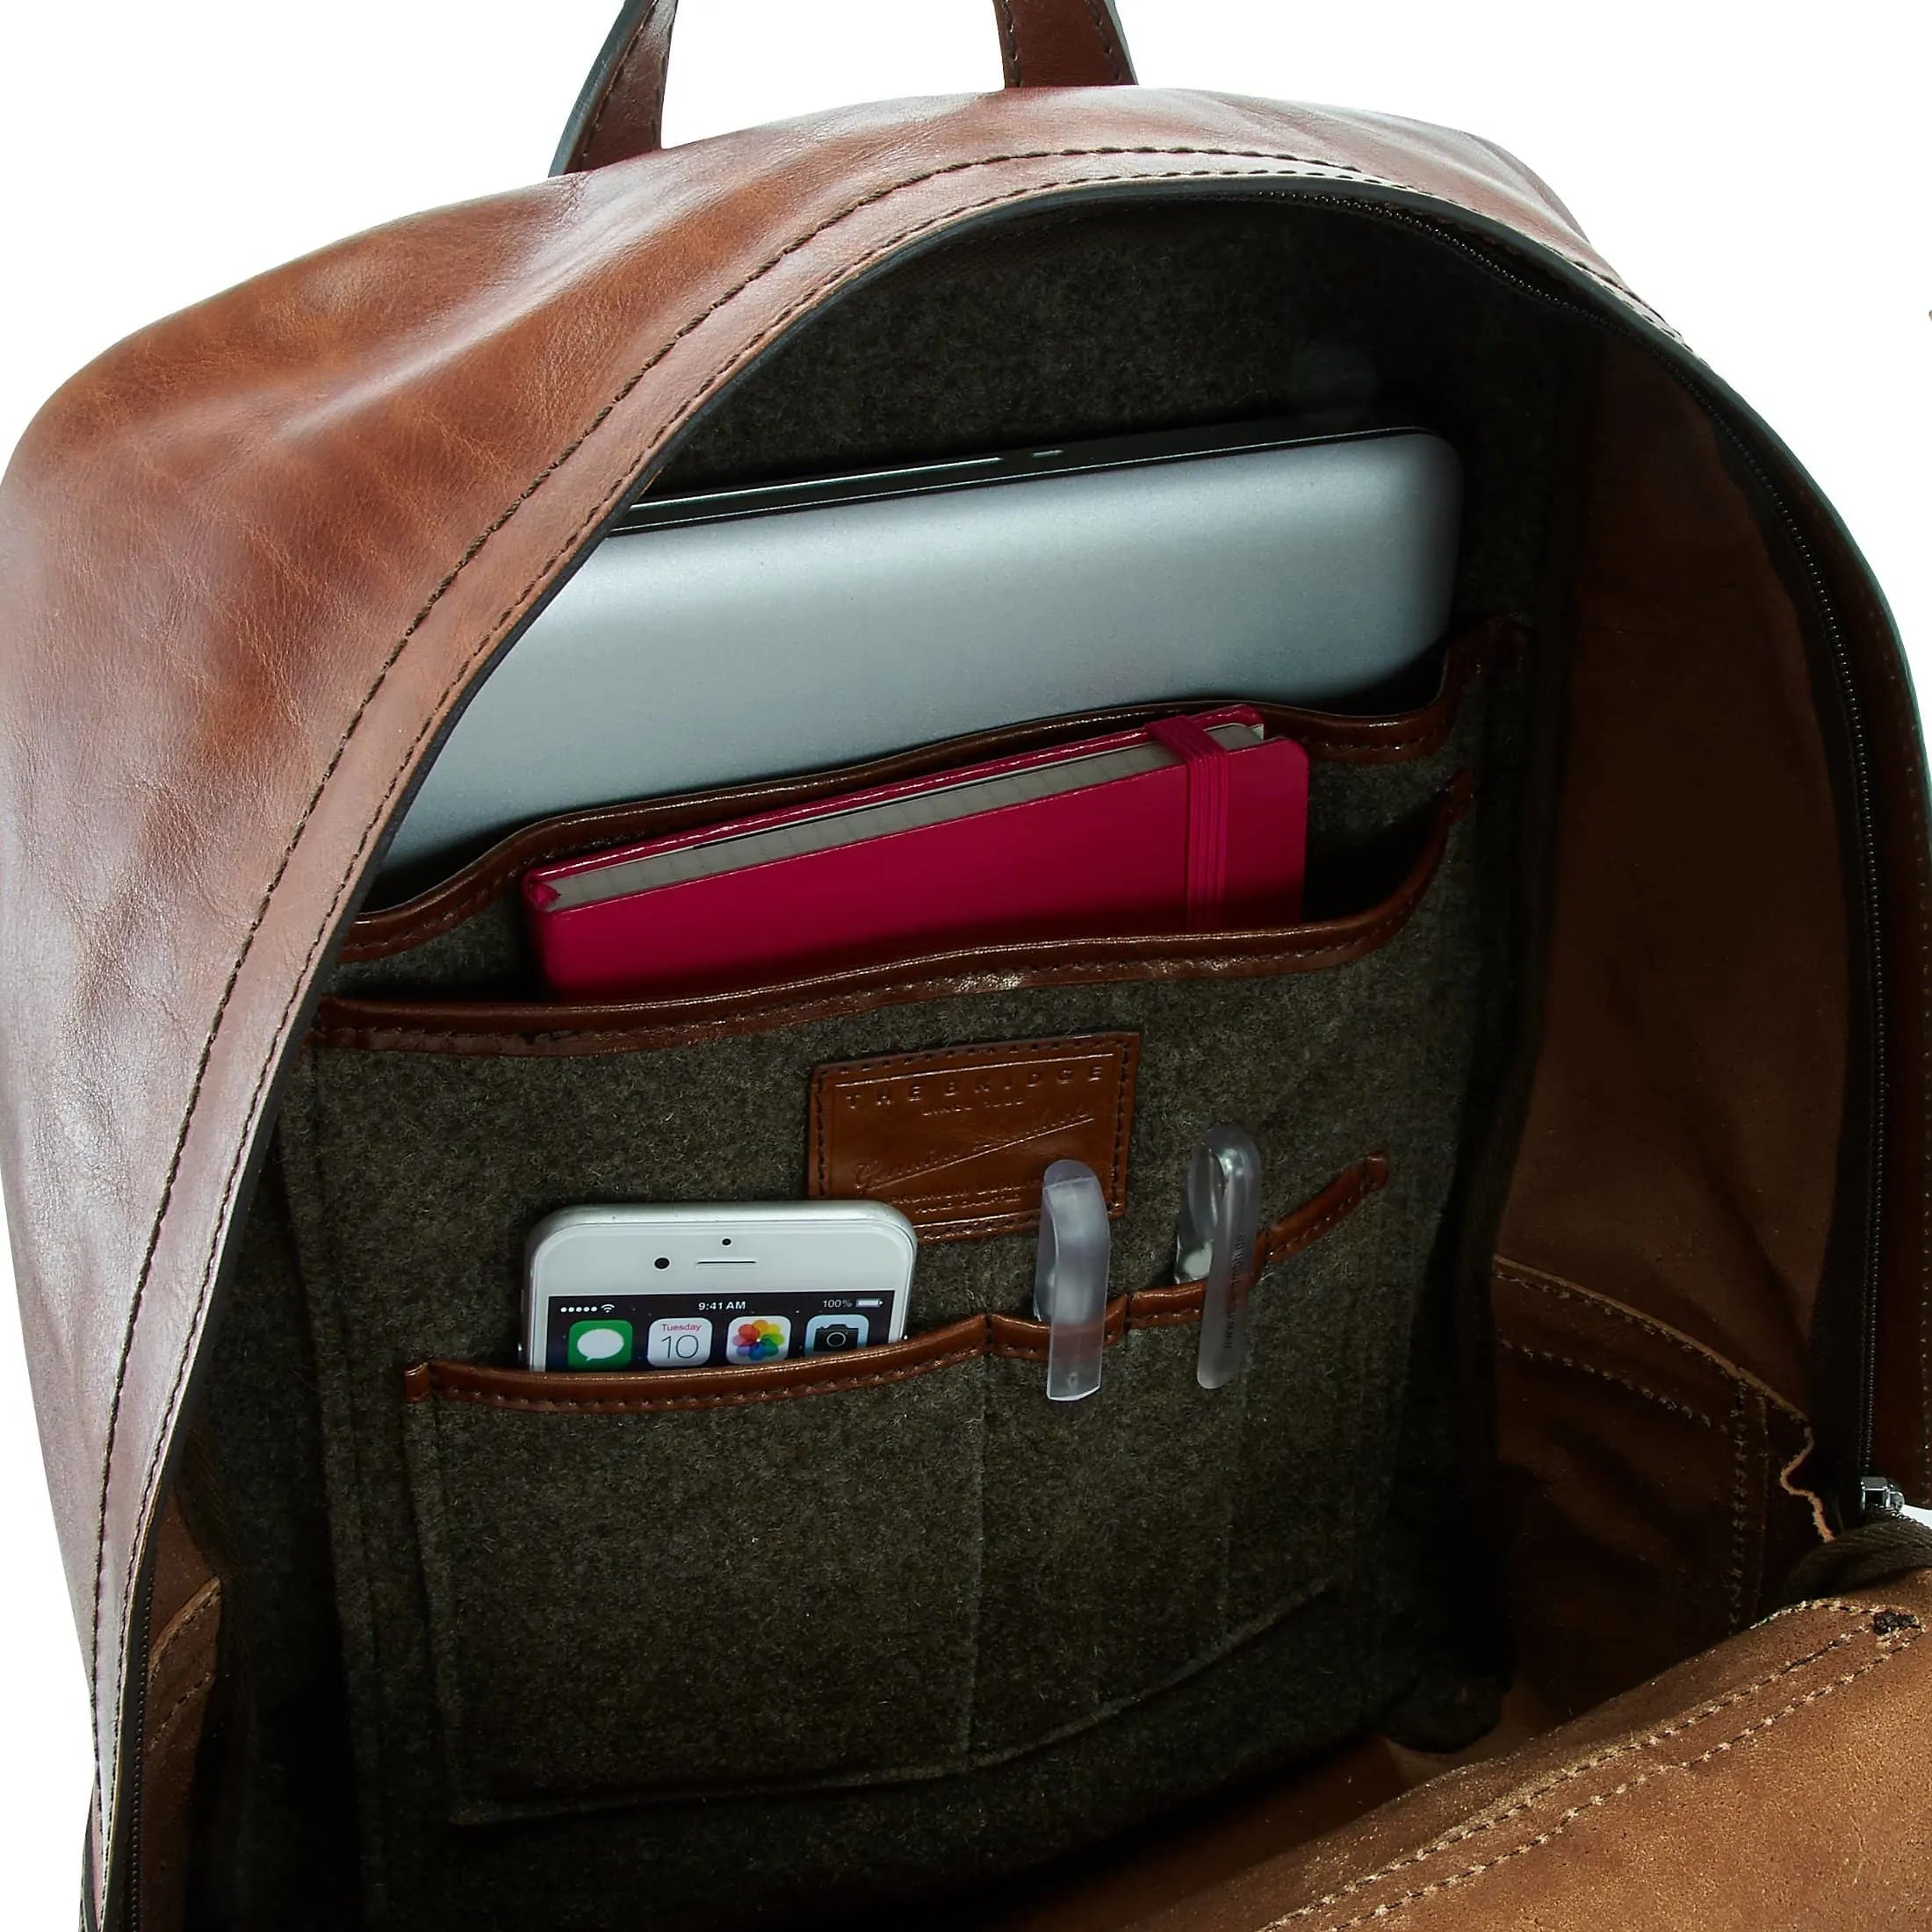 The Bridge Casentino backpack 40 cm - marrone